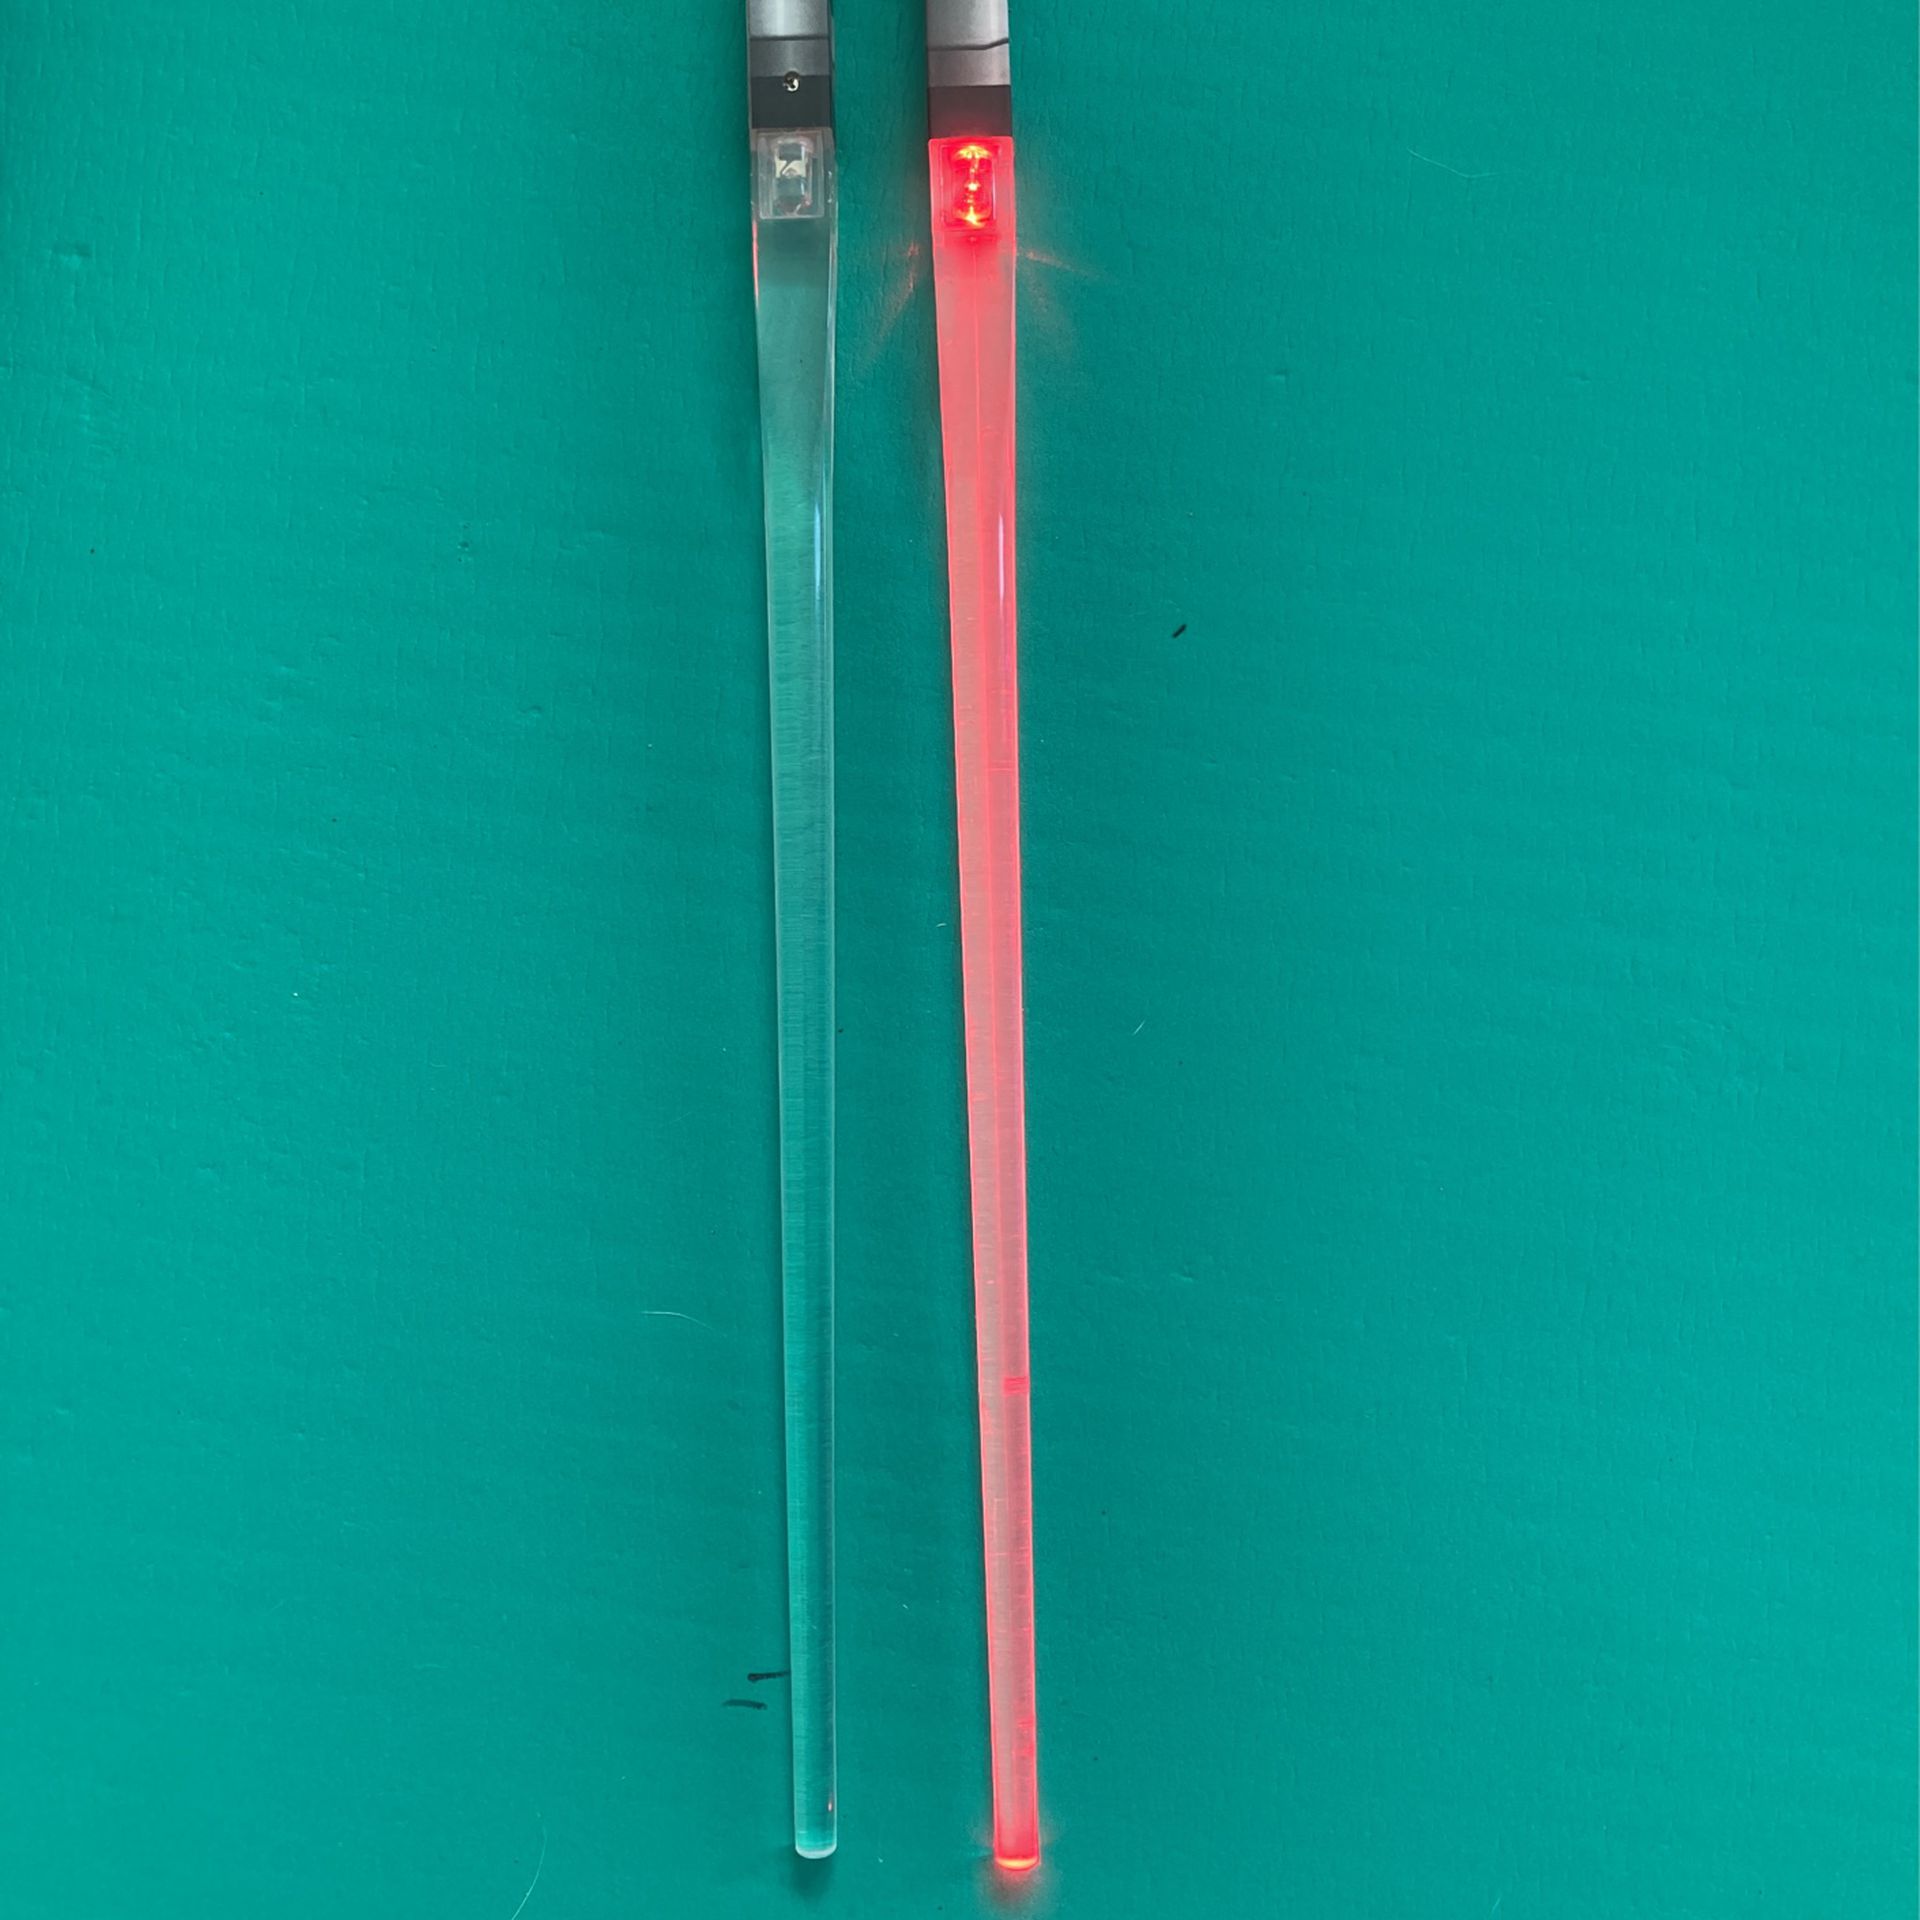 Star Wars LightSaber Chop Sticks 